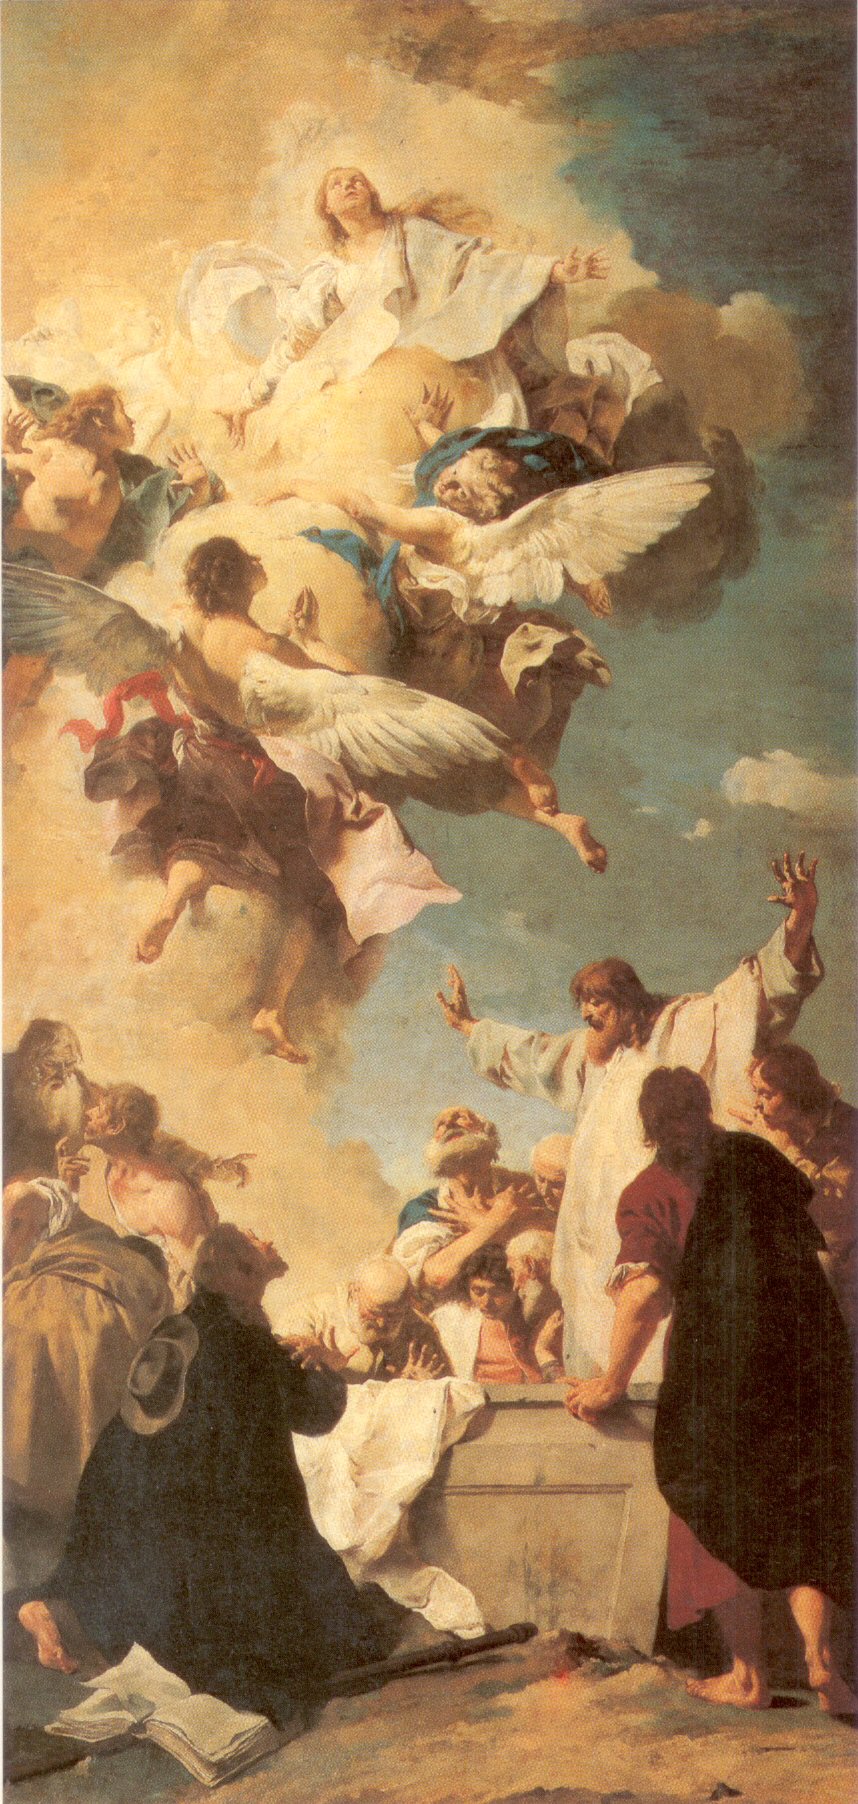 http://upload.wikimedia.org/wikipedia/commons/5/5d/Giovanni_Battista_Piazzetta_Assumptio_Mariae_1735.jpg